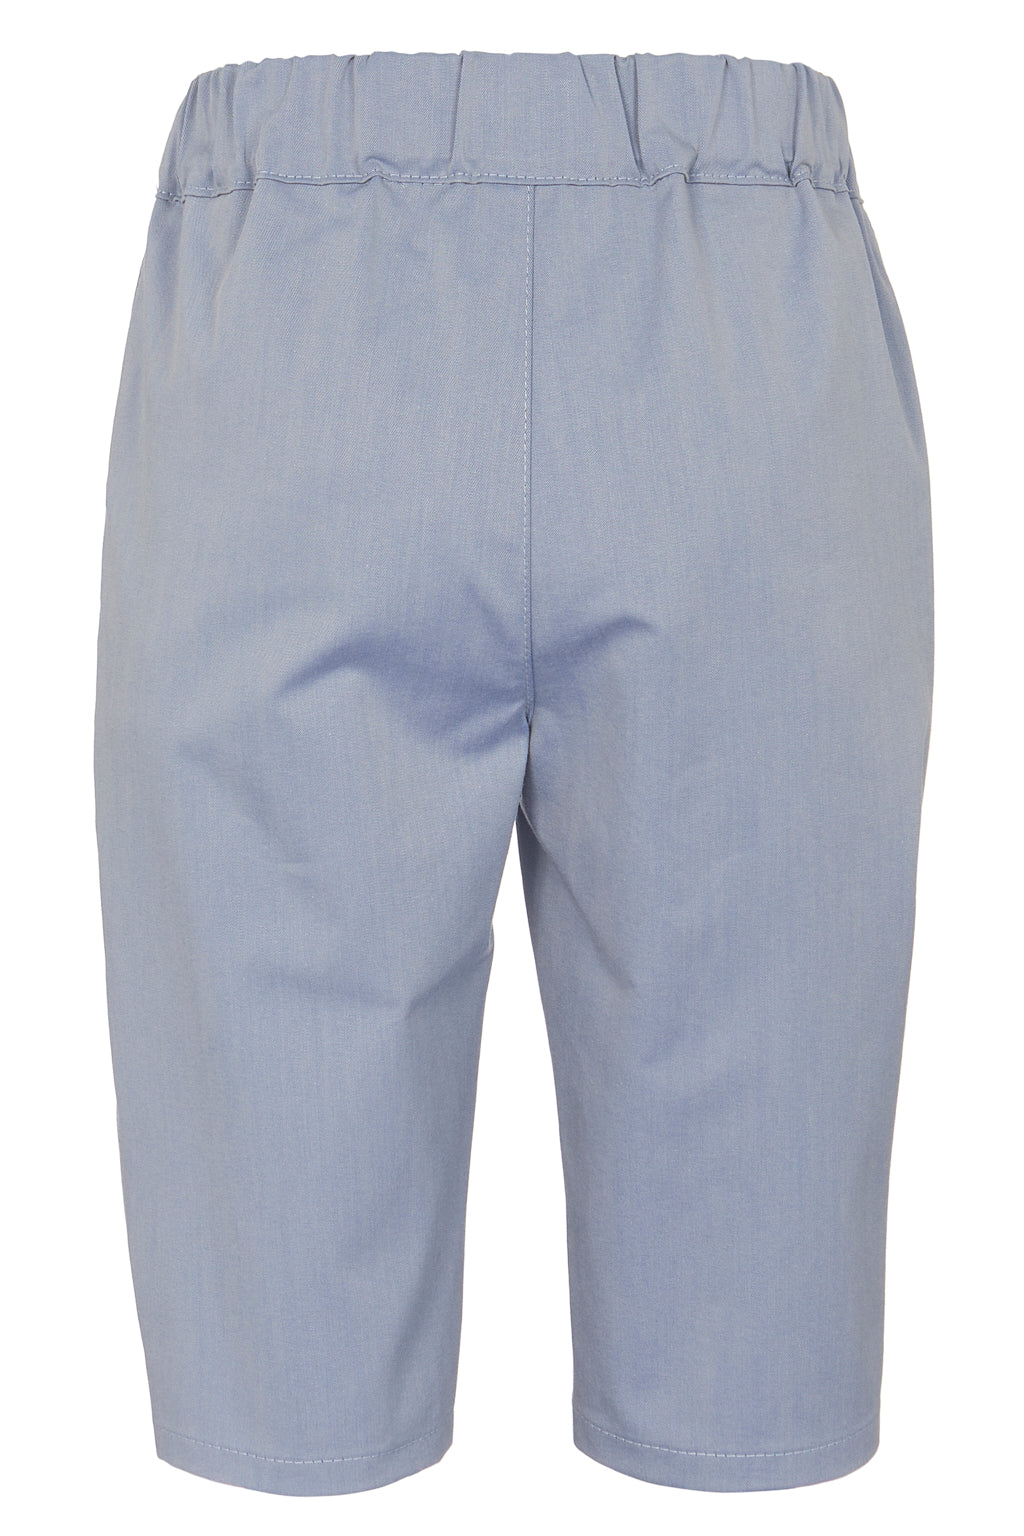 Emporio Armani Trouser Style:3Rhpj4